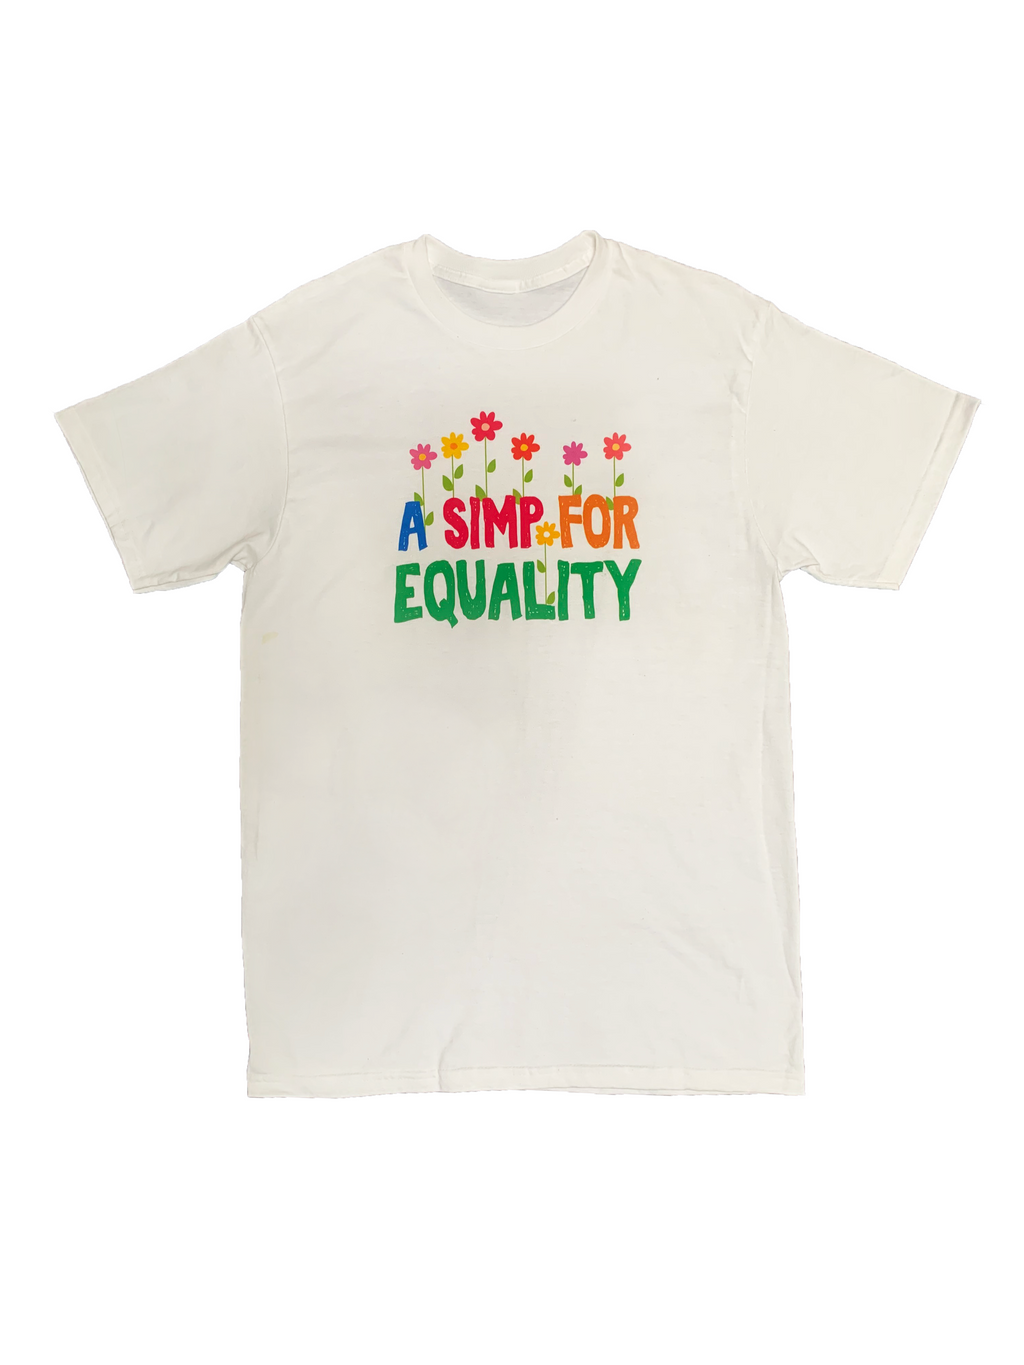 Simp for Equality